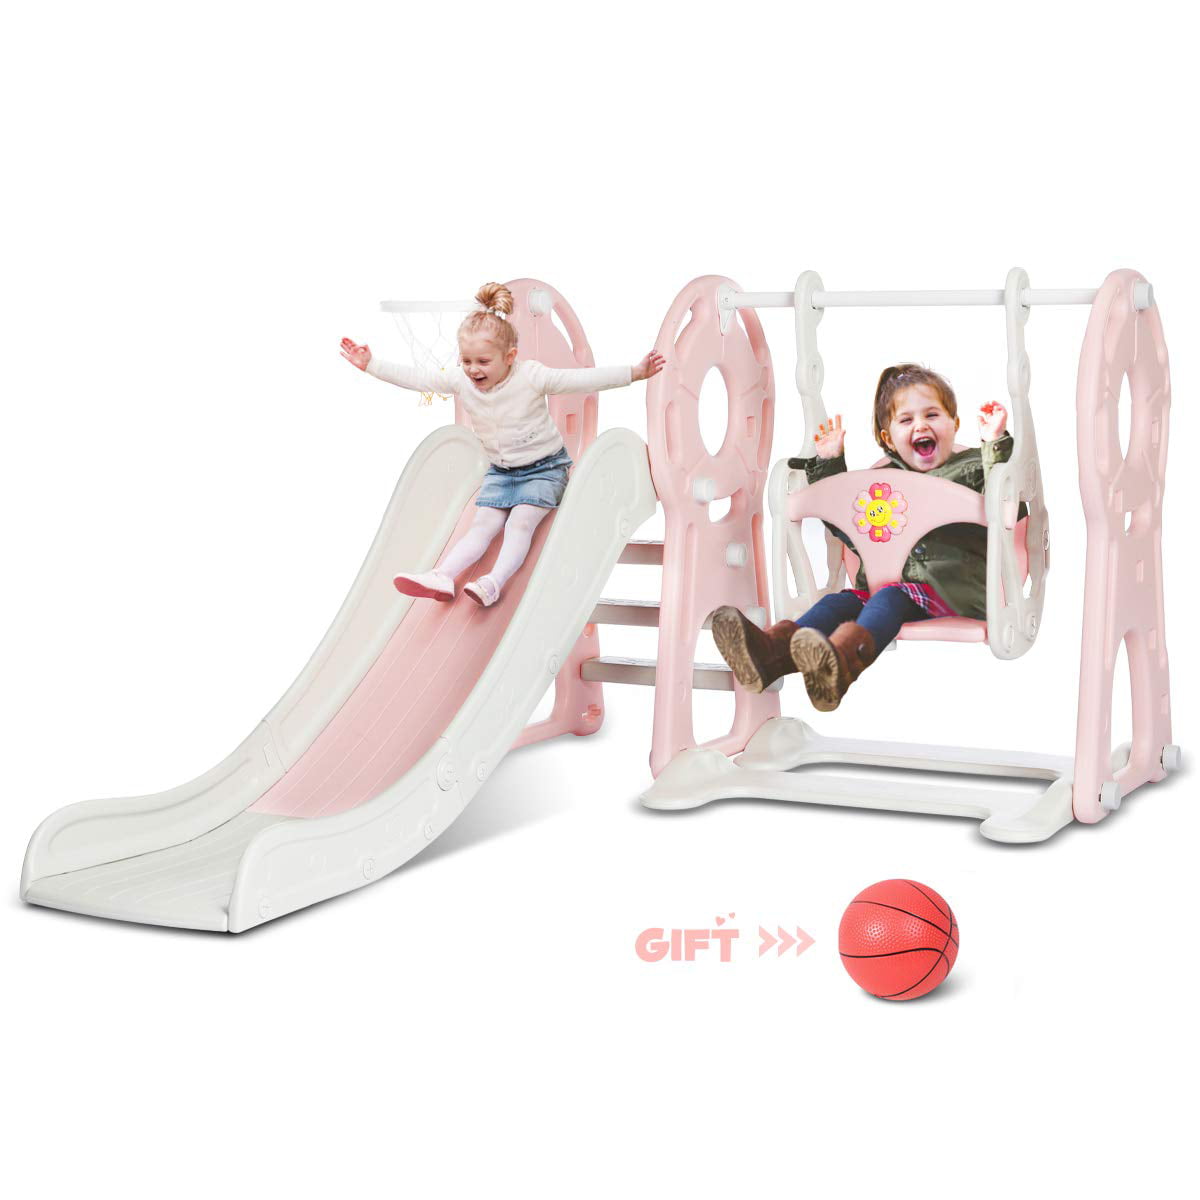 Toddler Kid Slide Swing Combination Toy Mountaineering Basketball Indoor NJ 